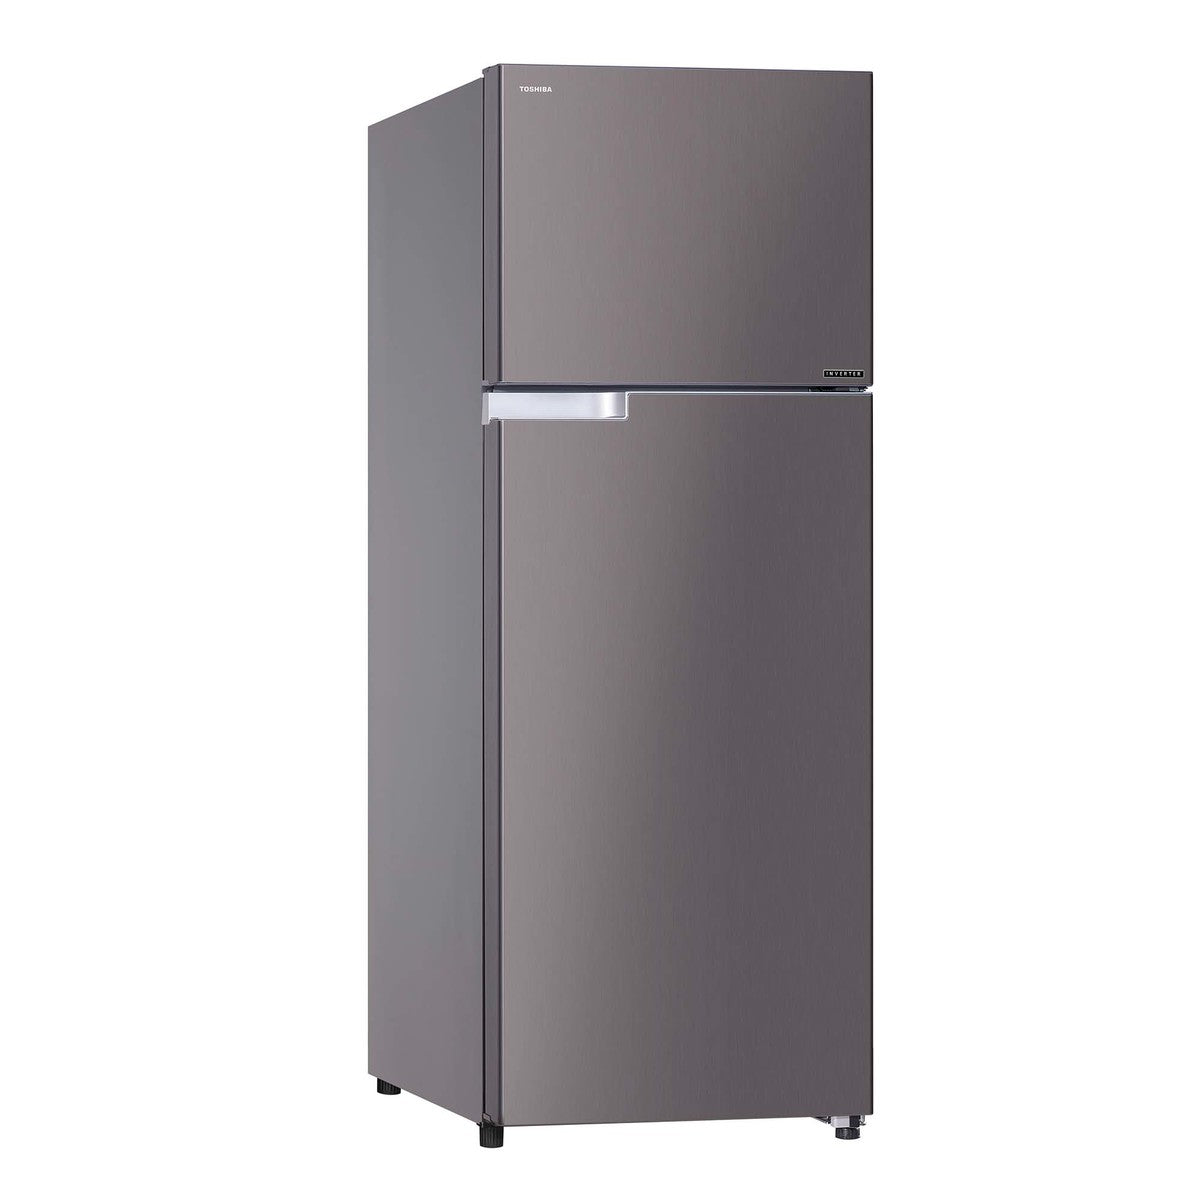 Toshiba Double Door Refrigerator 565 Ltr - GR-A565UBZ(LS)